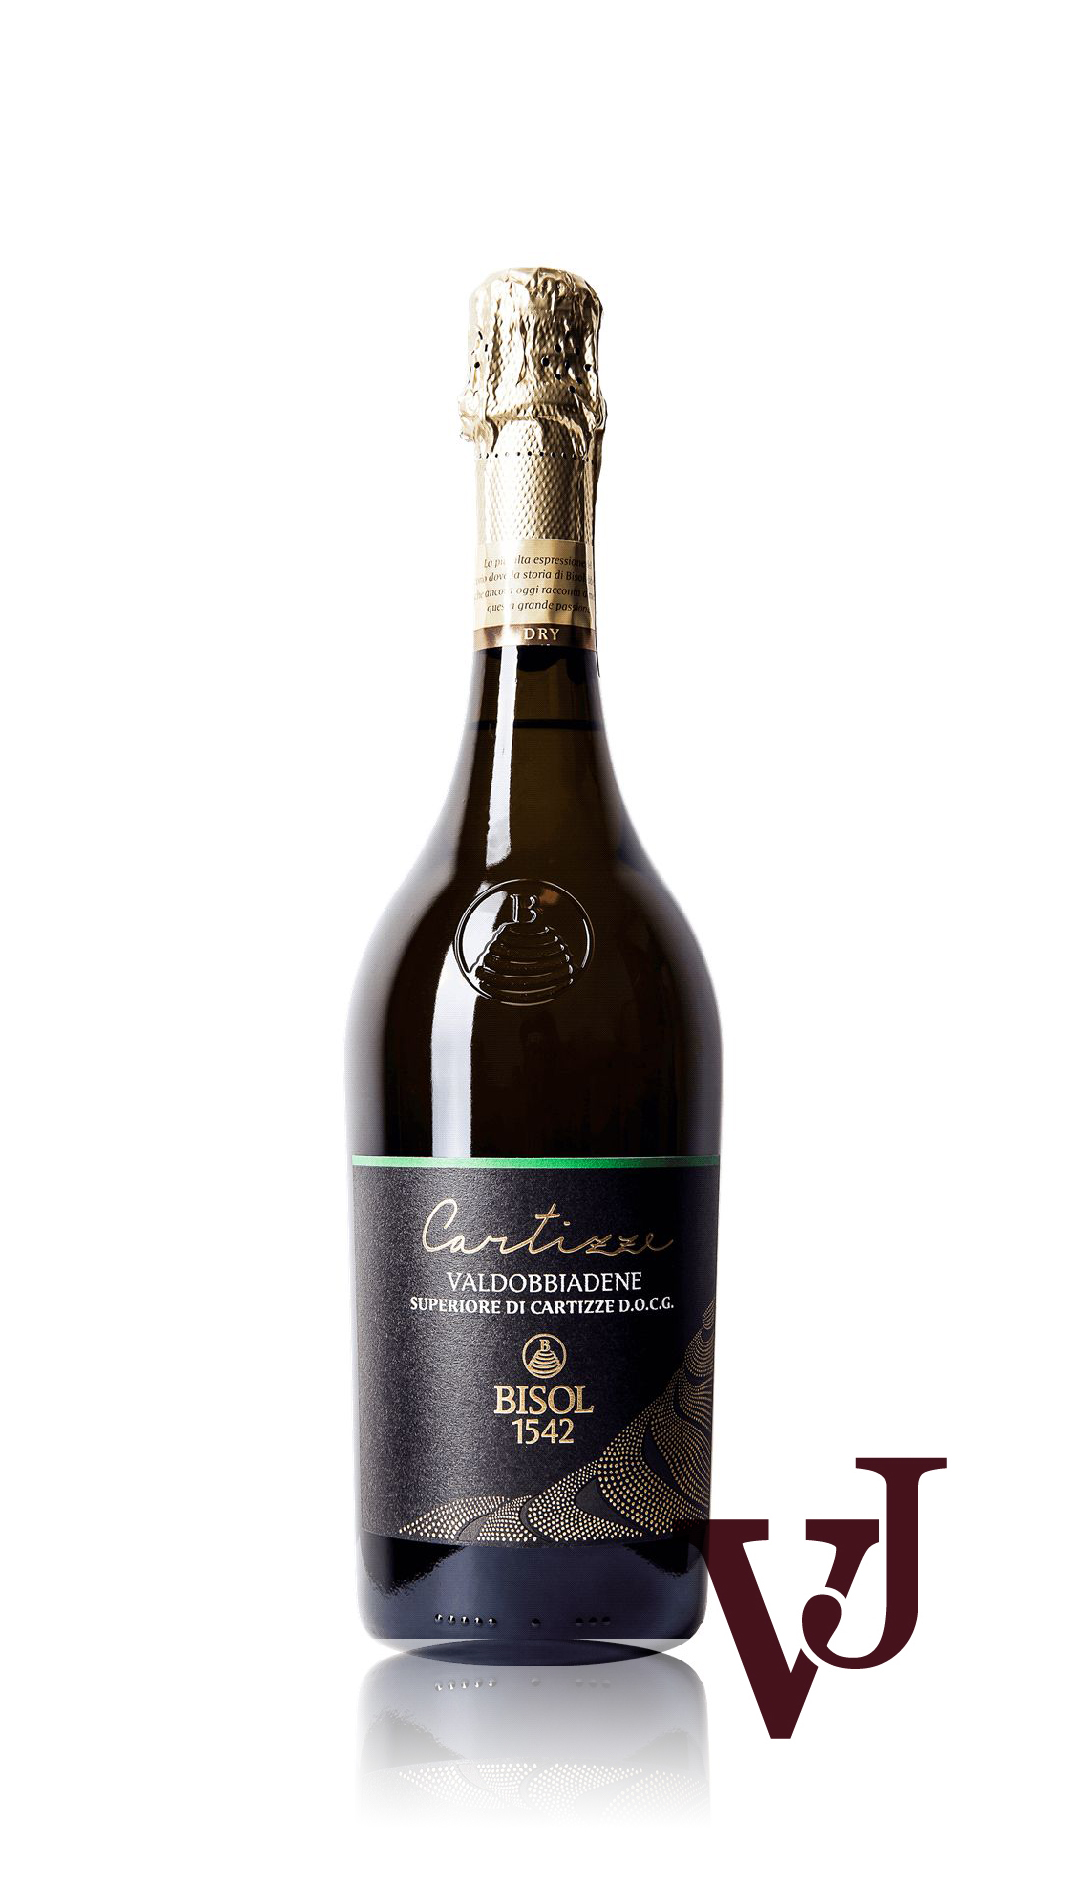 Mousserande Vin - Cartizze Valdobbiadene Superiore Dry artikel nummer 7979701 från producenten Bisol Desiderio & Figli Azienda Agricola från området Italien